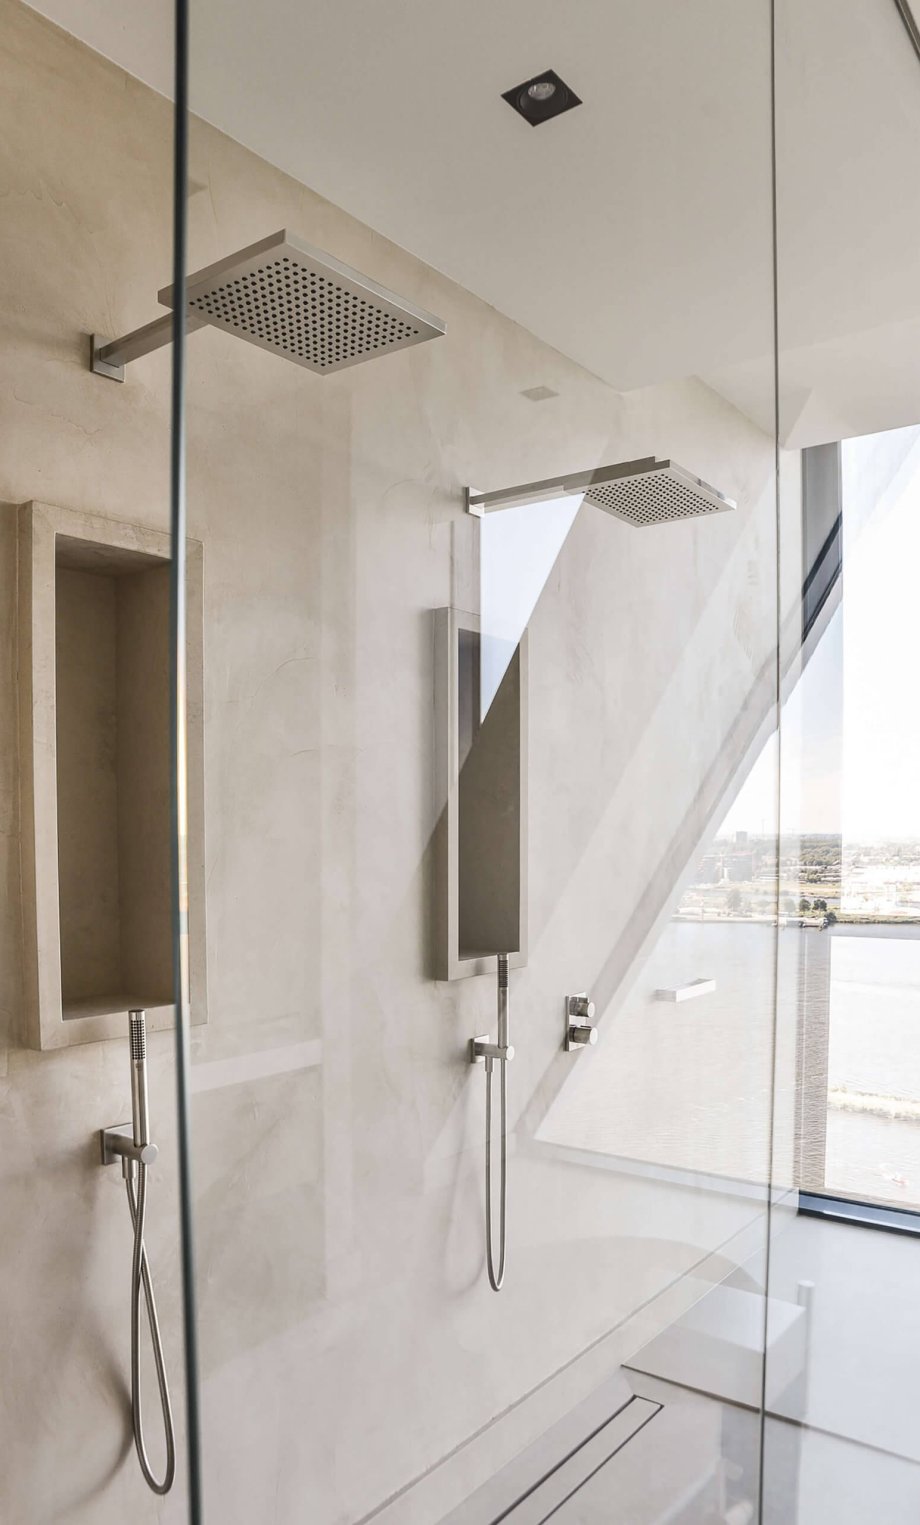 Double-Chrome-Shower-Sets-In-Bathroom-2021-10-21-02-44-57-Utc (1)